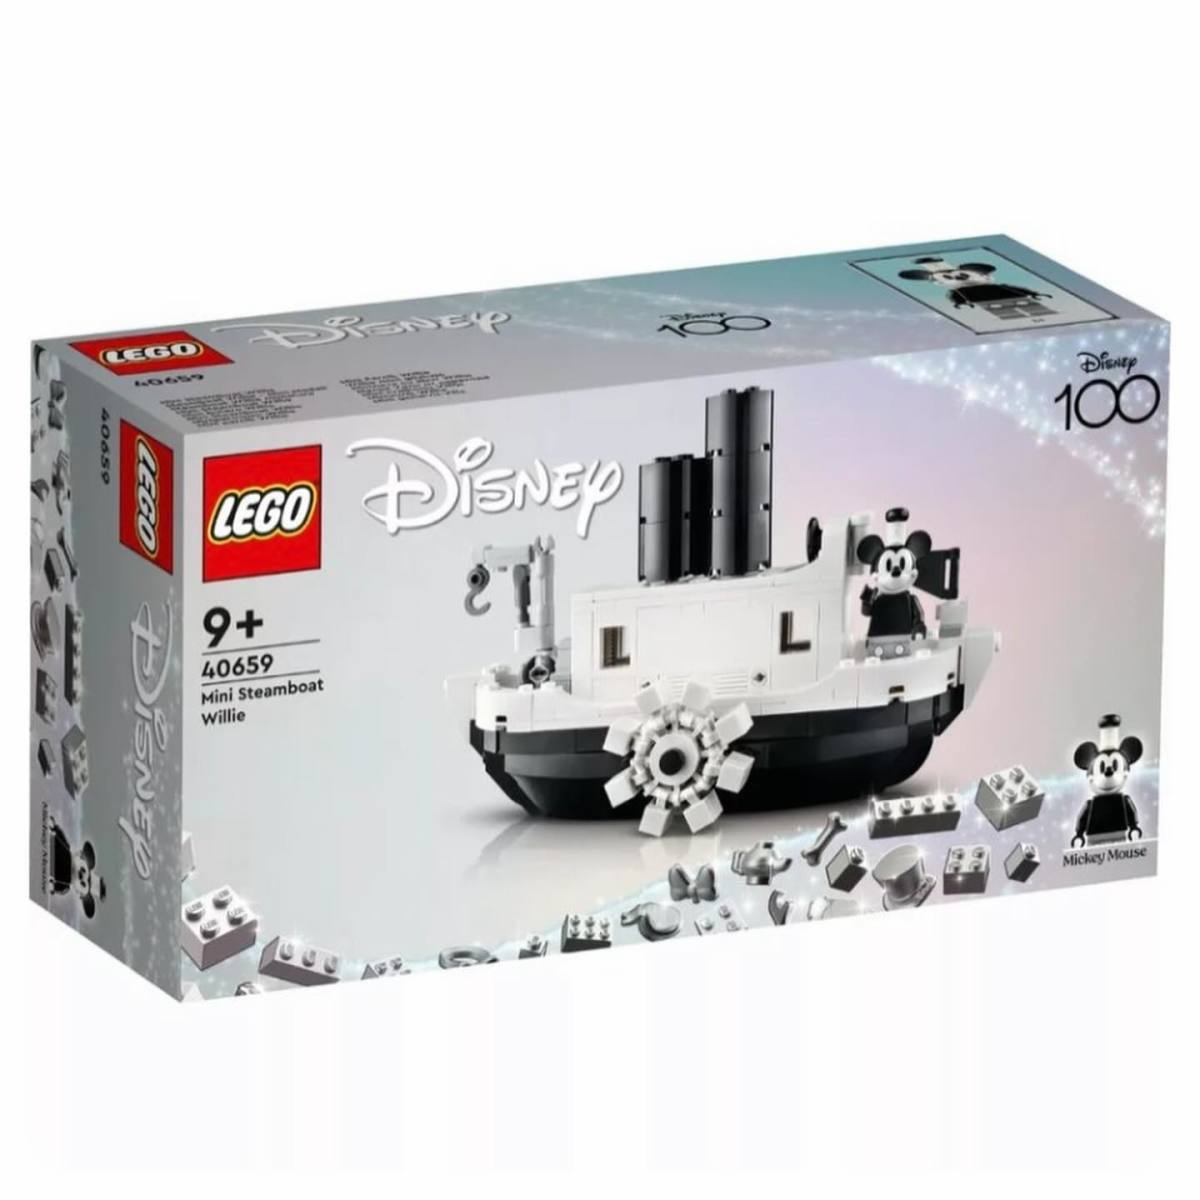 LEGO 40659「迷你汽船威利號」（Mini Steamboat Willie）經典汽船縮小後再次入港！